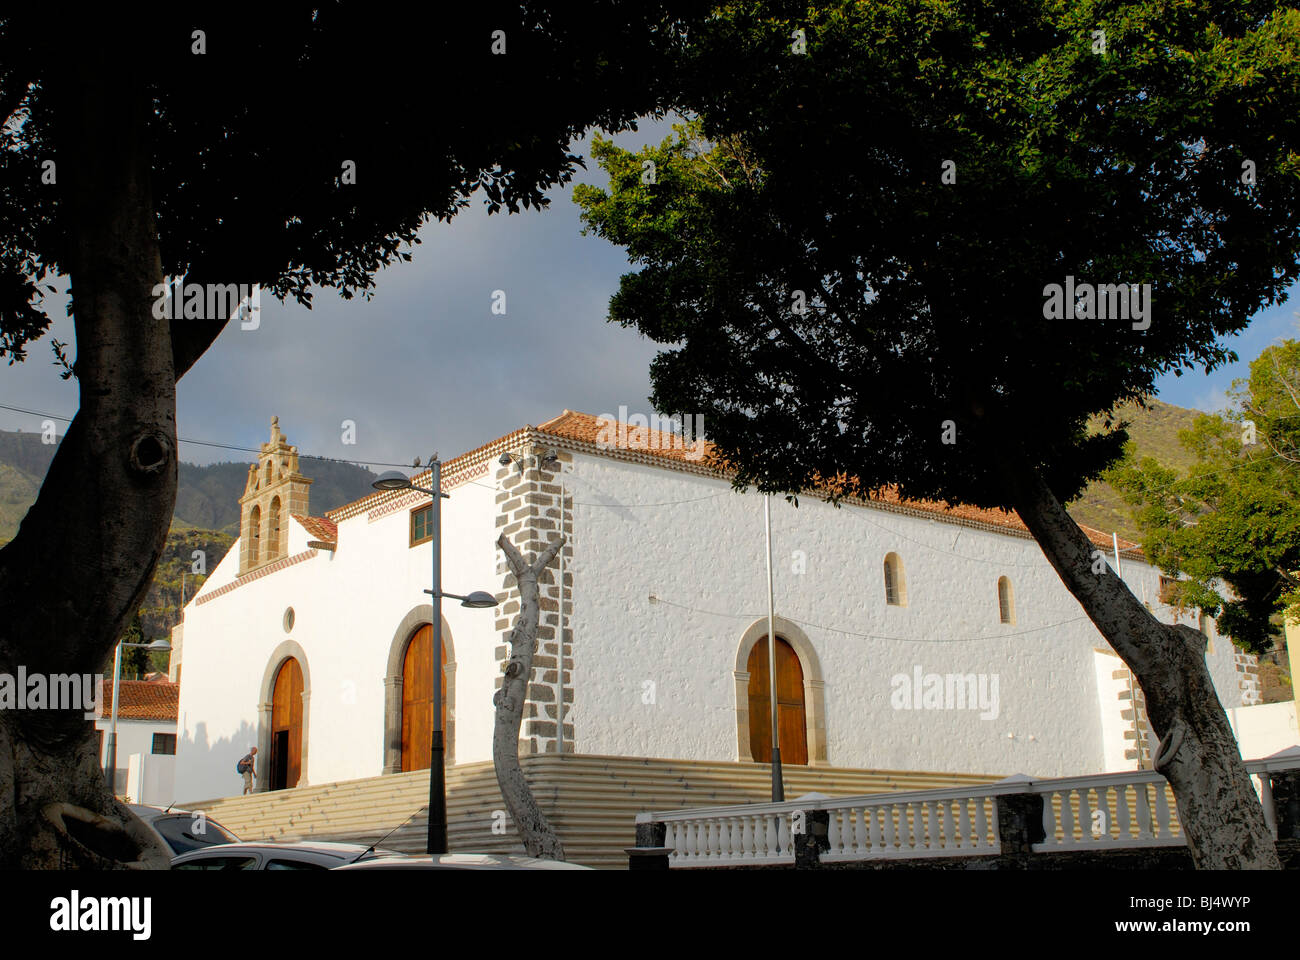 Spanien, Kanarische Inseln, Teneriffa Adeje, Kirche Santa Ursula | Espagne, Canaries, Tenerife Adeje, église Santa Ursula Banque D'Images